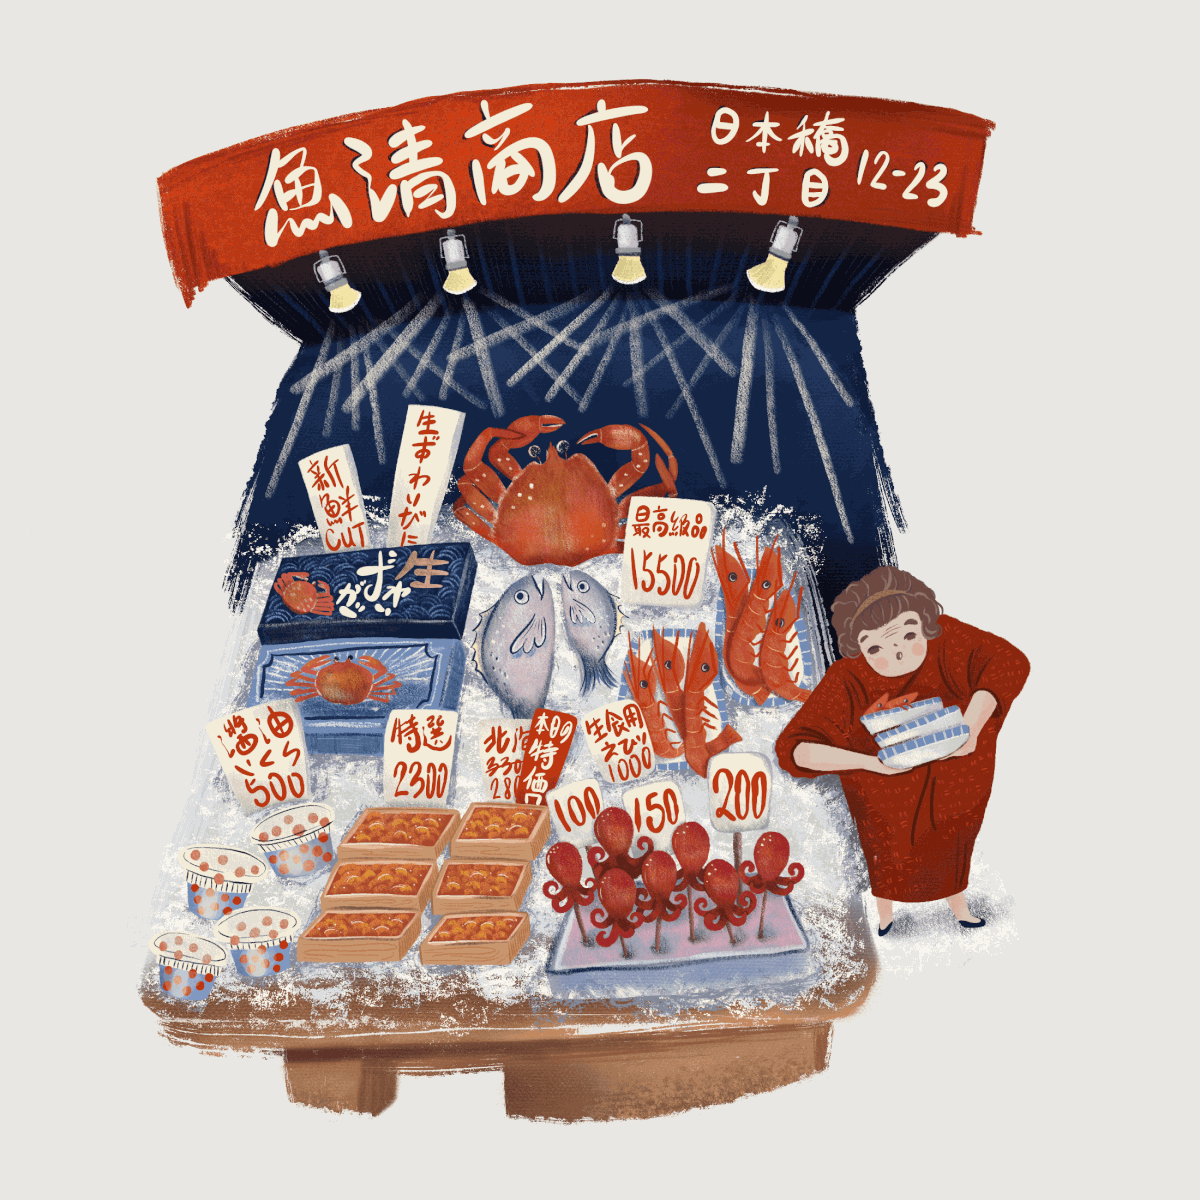 Japan food stall illustration animated gif on Behance